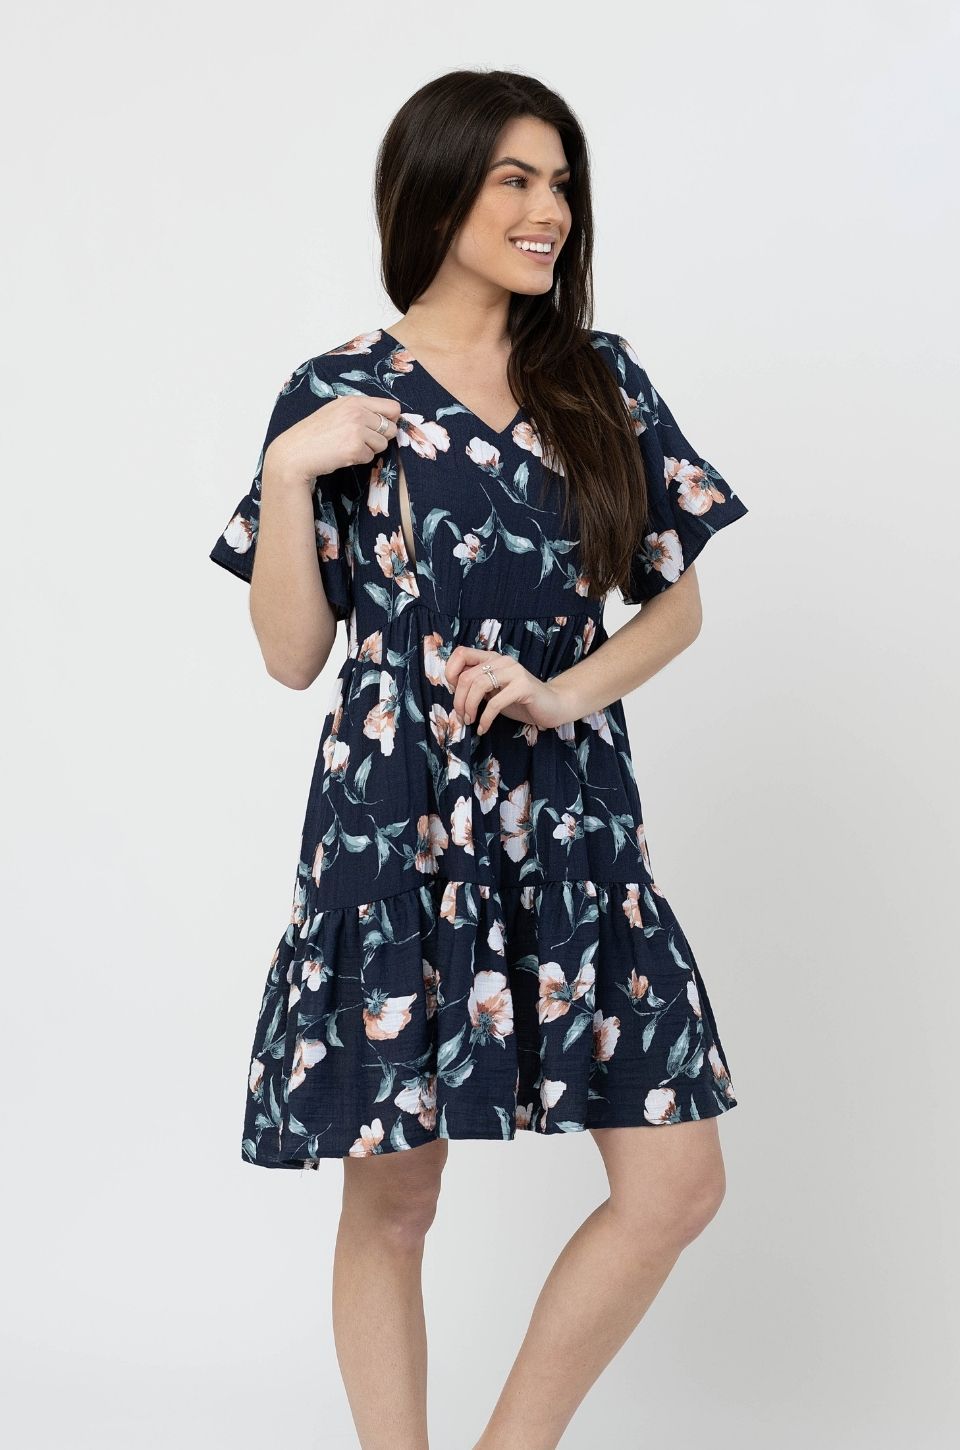 Floral Nursing Dress With Pockets -Bell Sleeve- Navy Floral